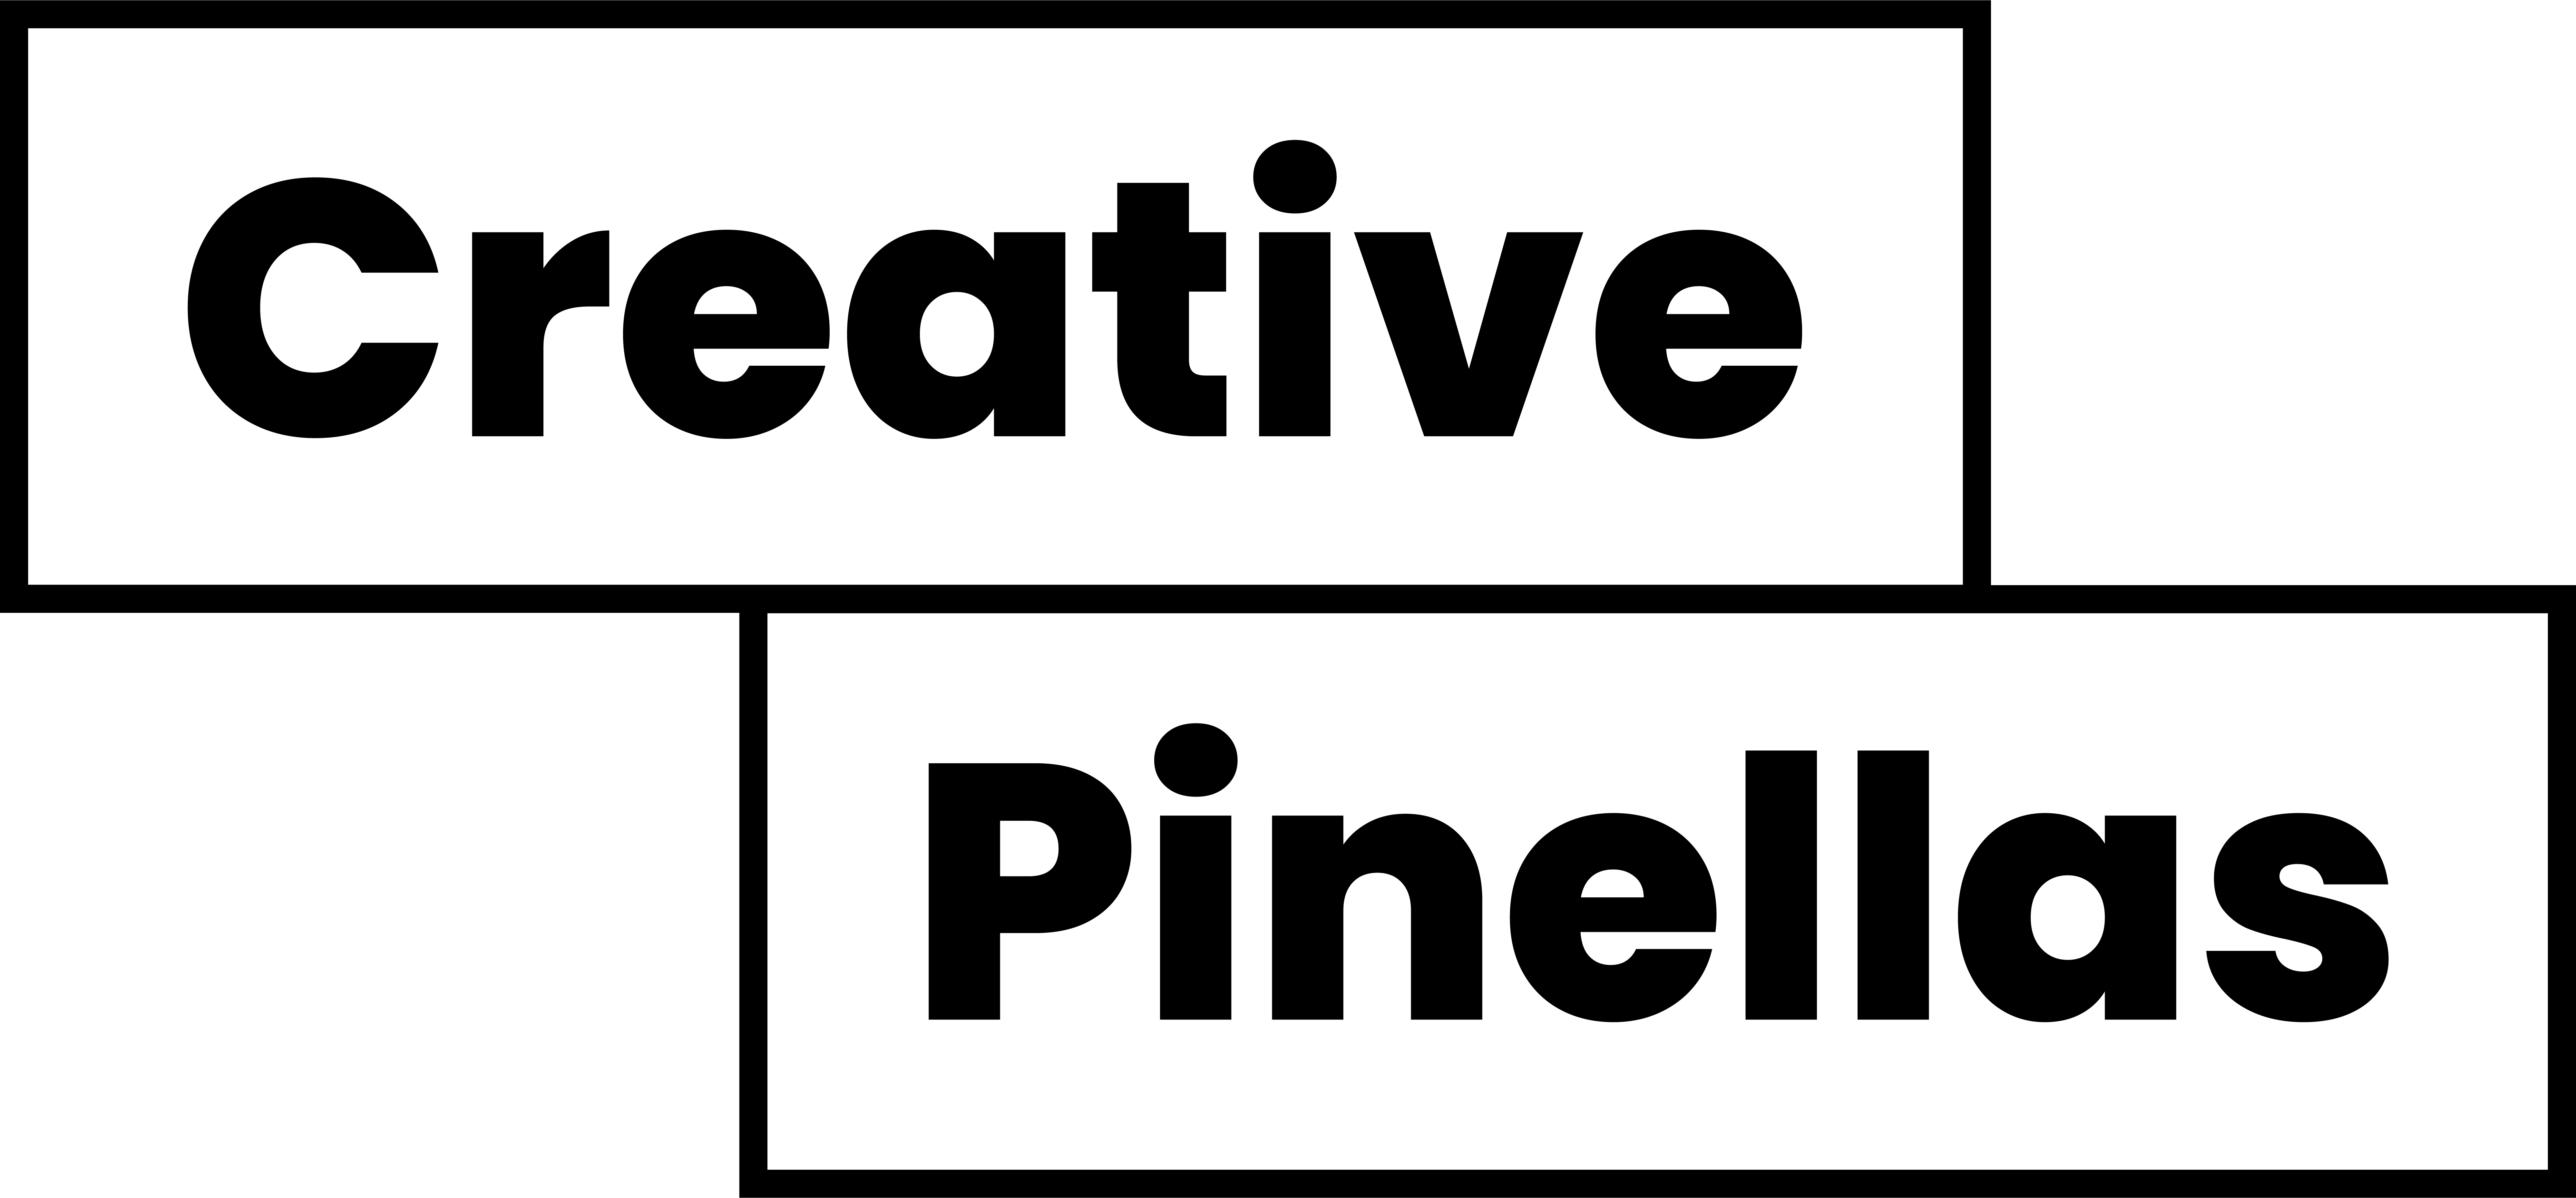 Creative Pinellas logo